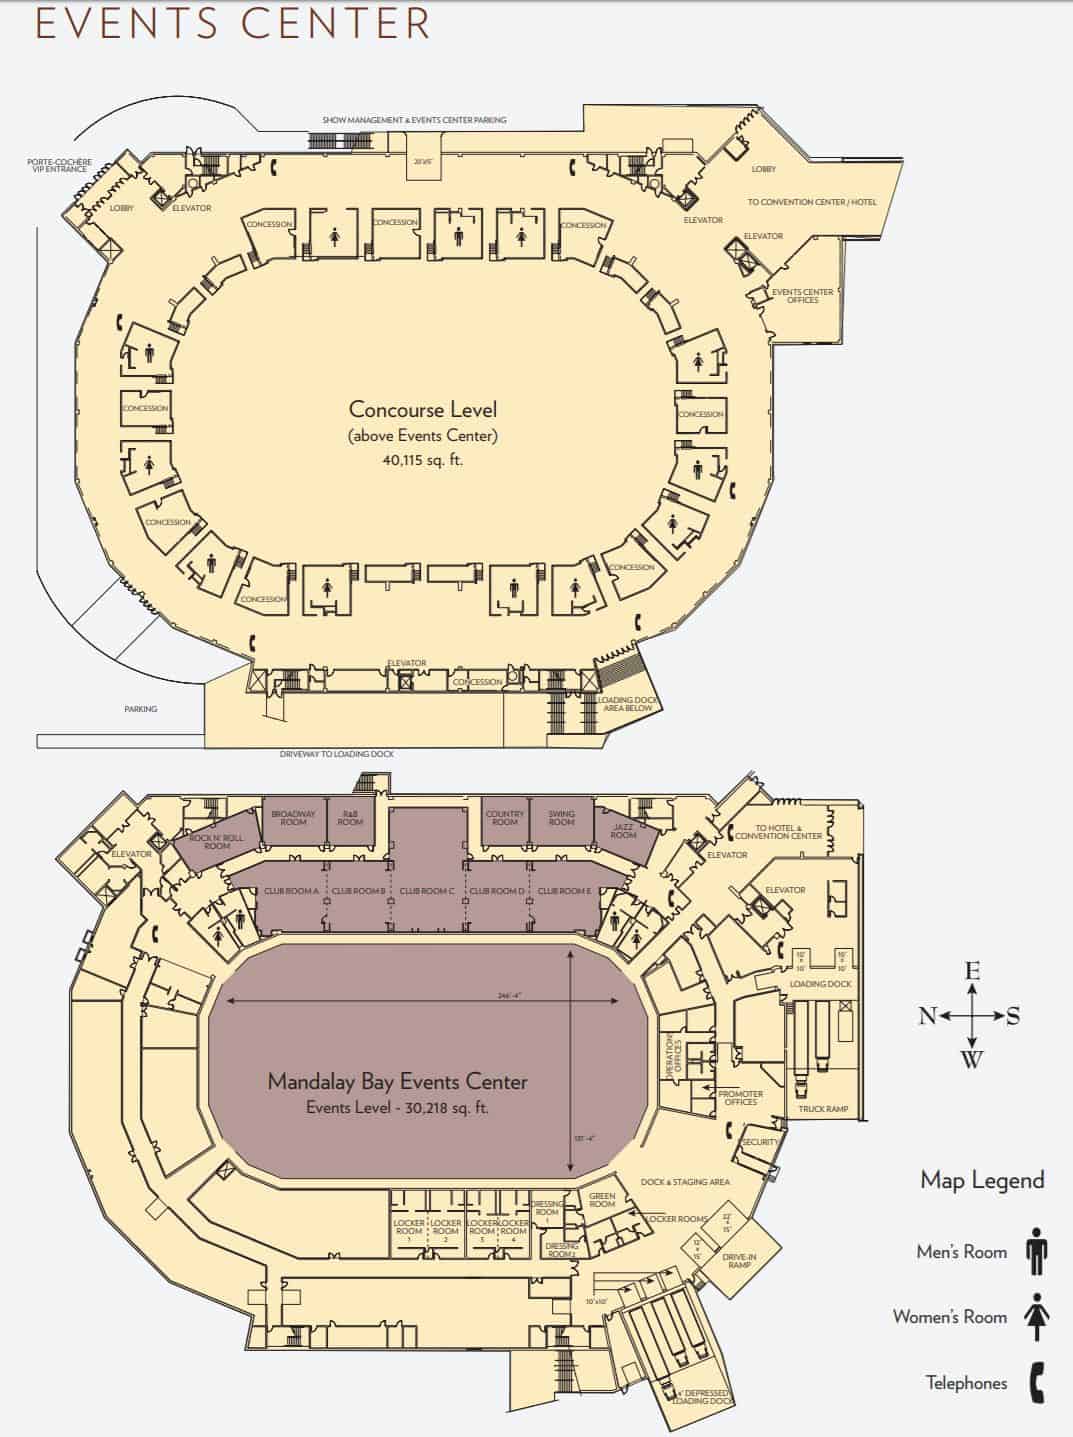 Mandalay Bay Convention Center Map, Parking & Hotels, Las Vegas NV